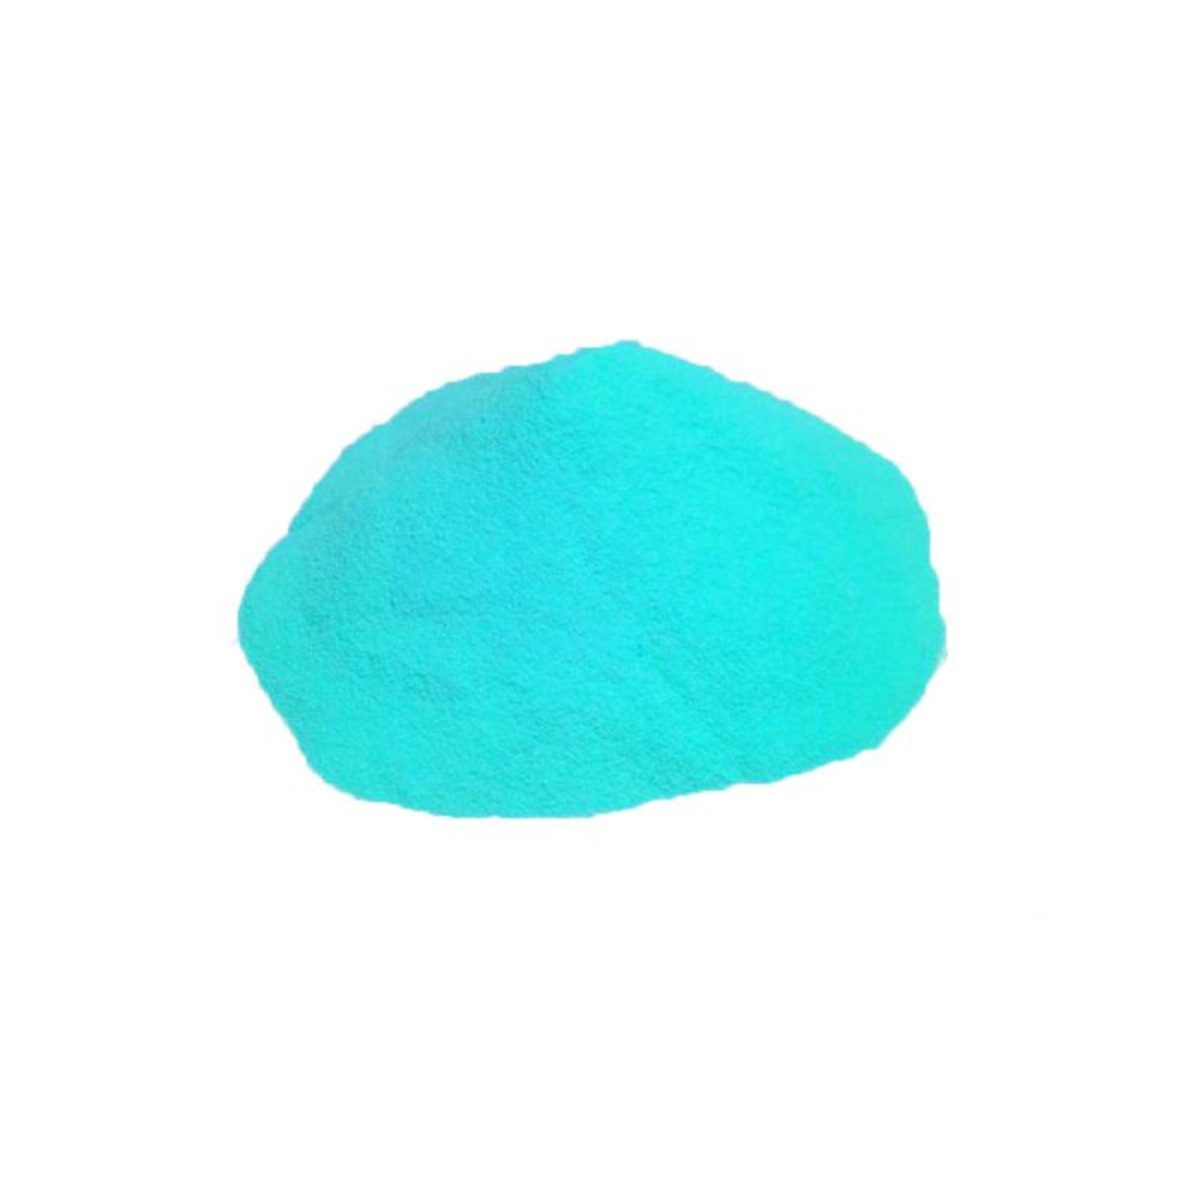 M2 Fishing Plastgum Powder Plasticizer For Ballast -  Phosphorescent Blue - 100 g        